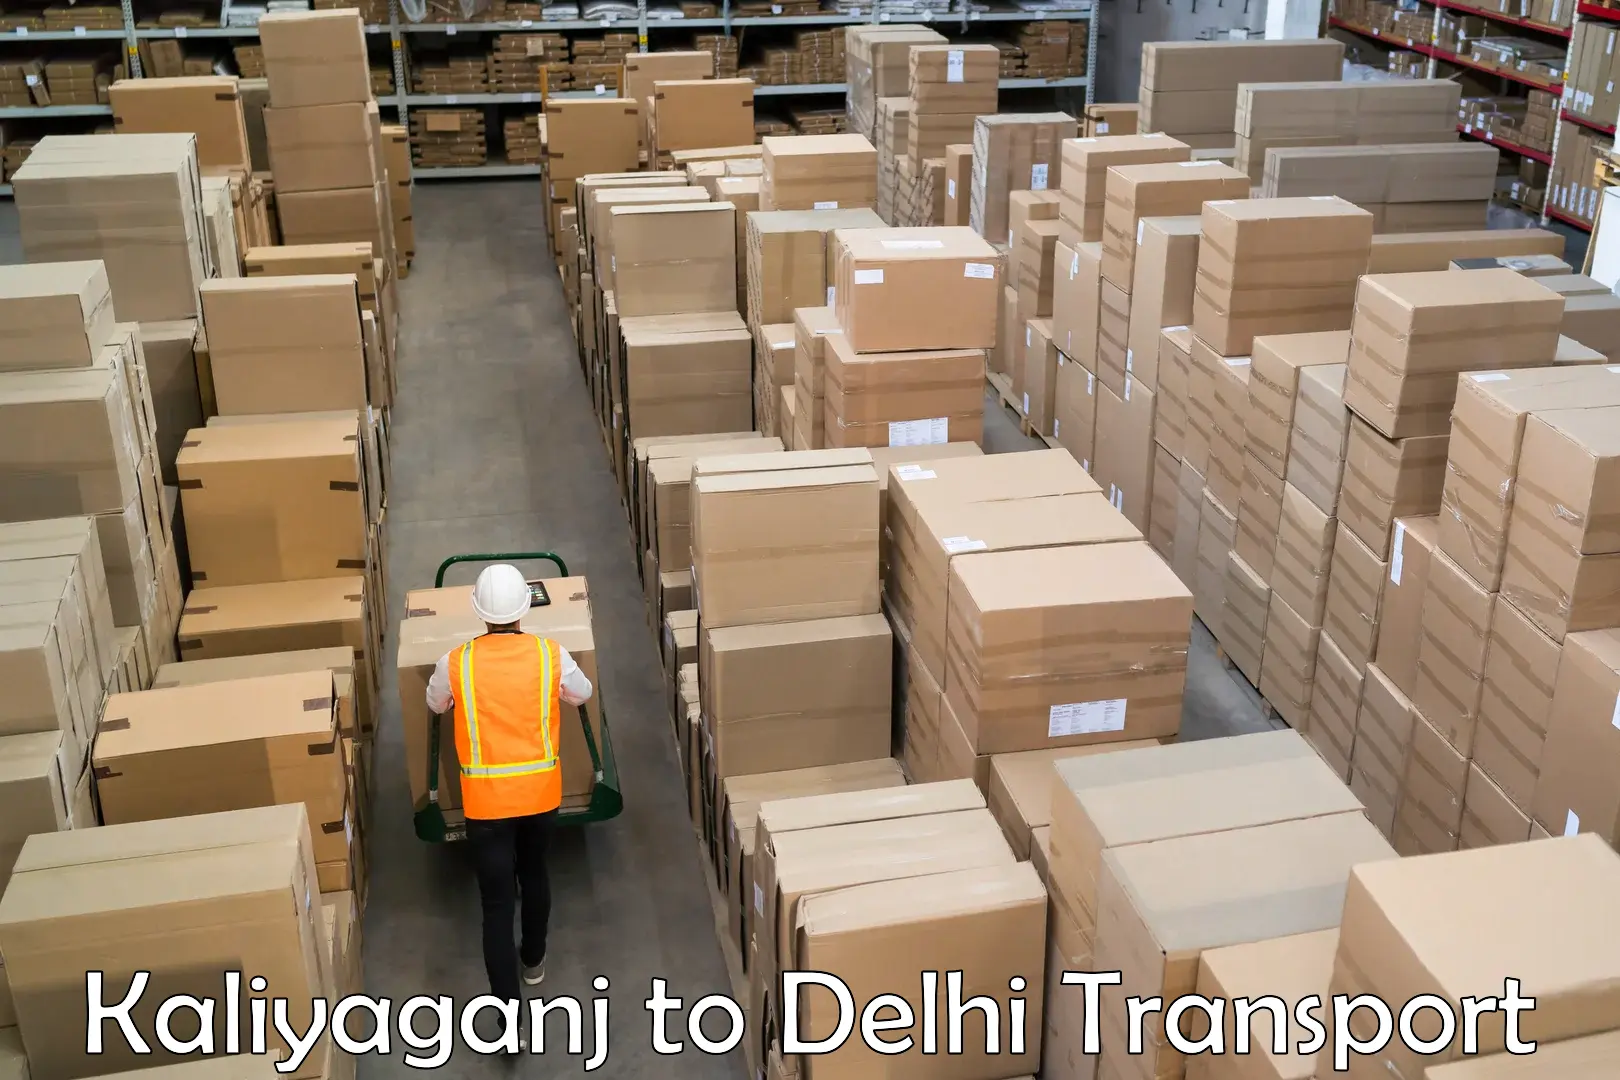 Truck transport companies in India Kaliyaganj to Delhi